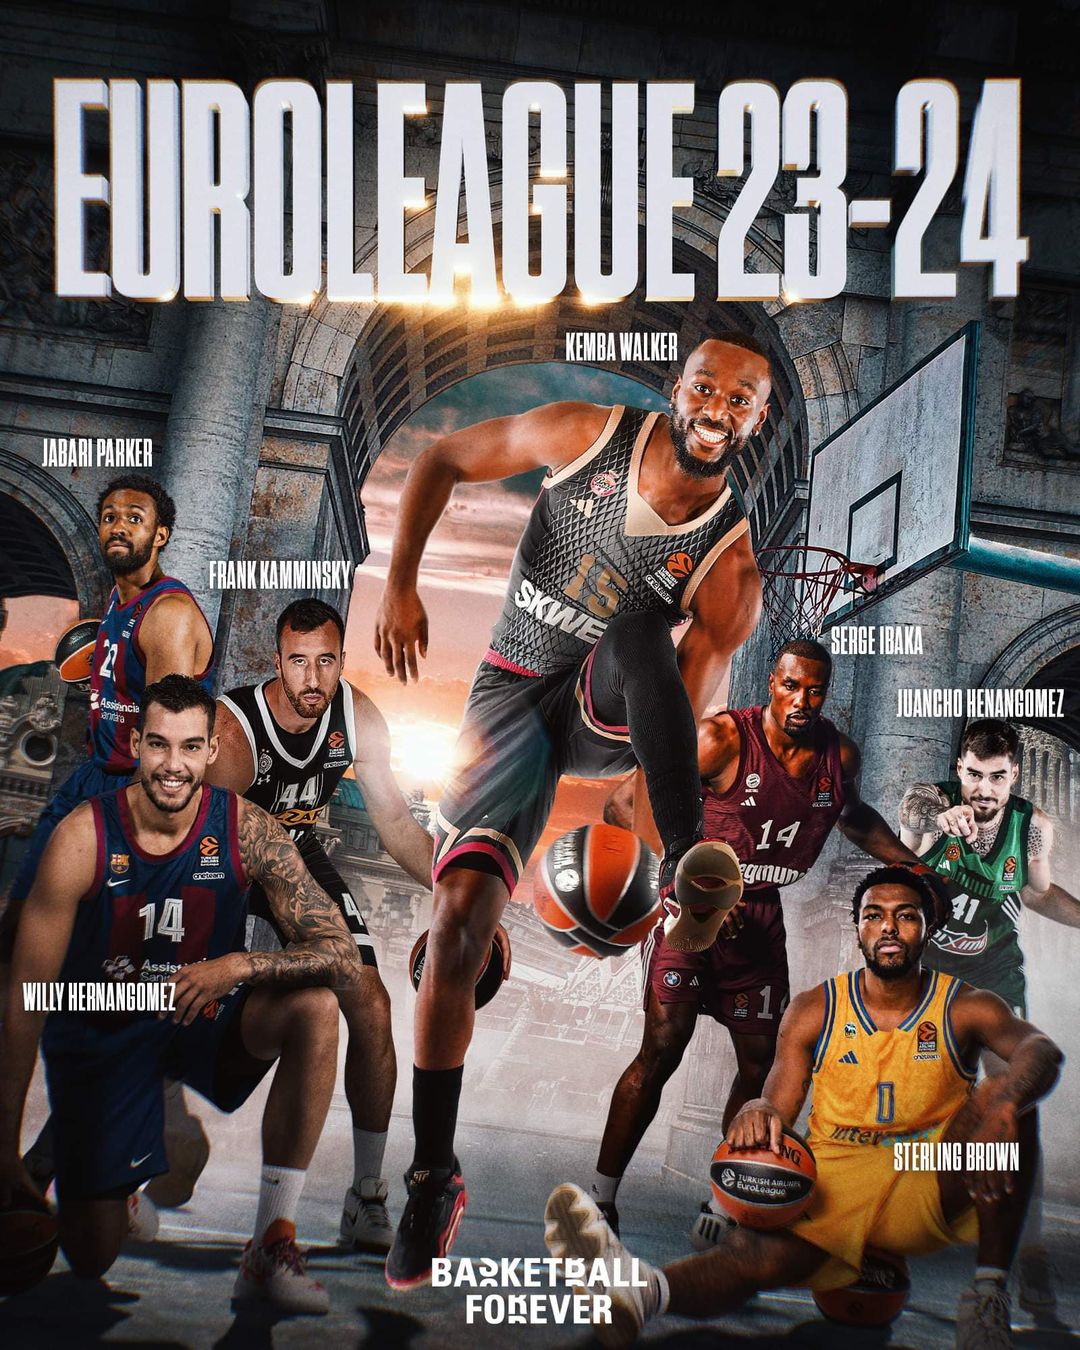 Kemba Walker 2020 NBA All-Star Game Highlights (23 pts) 